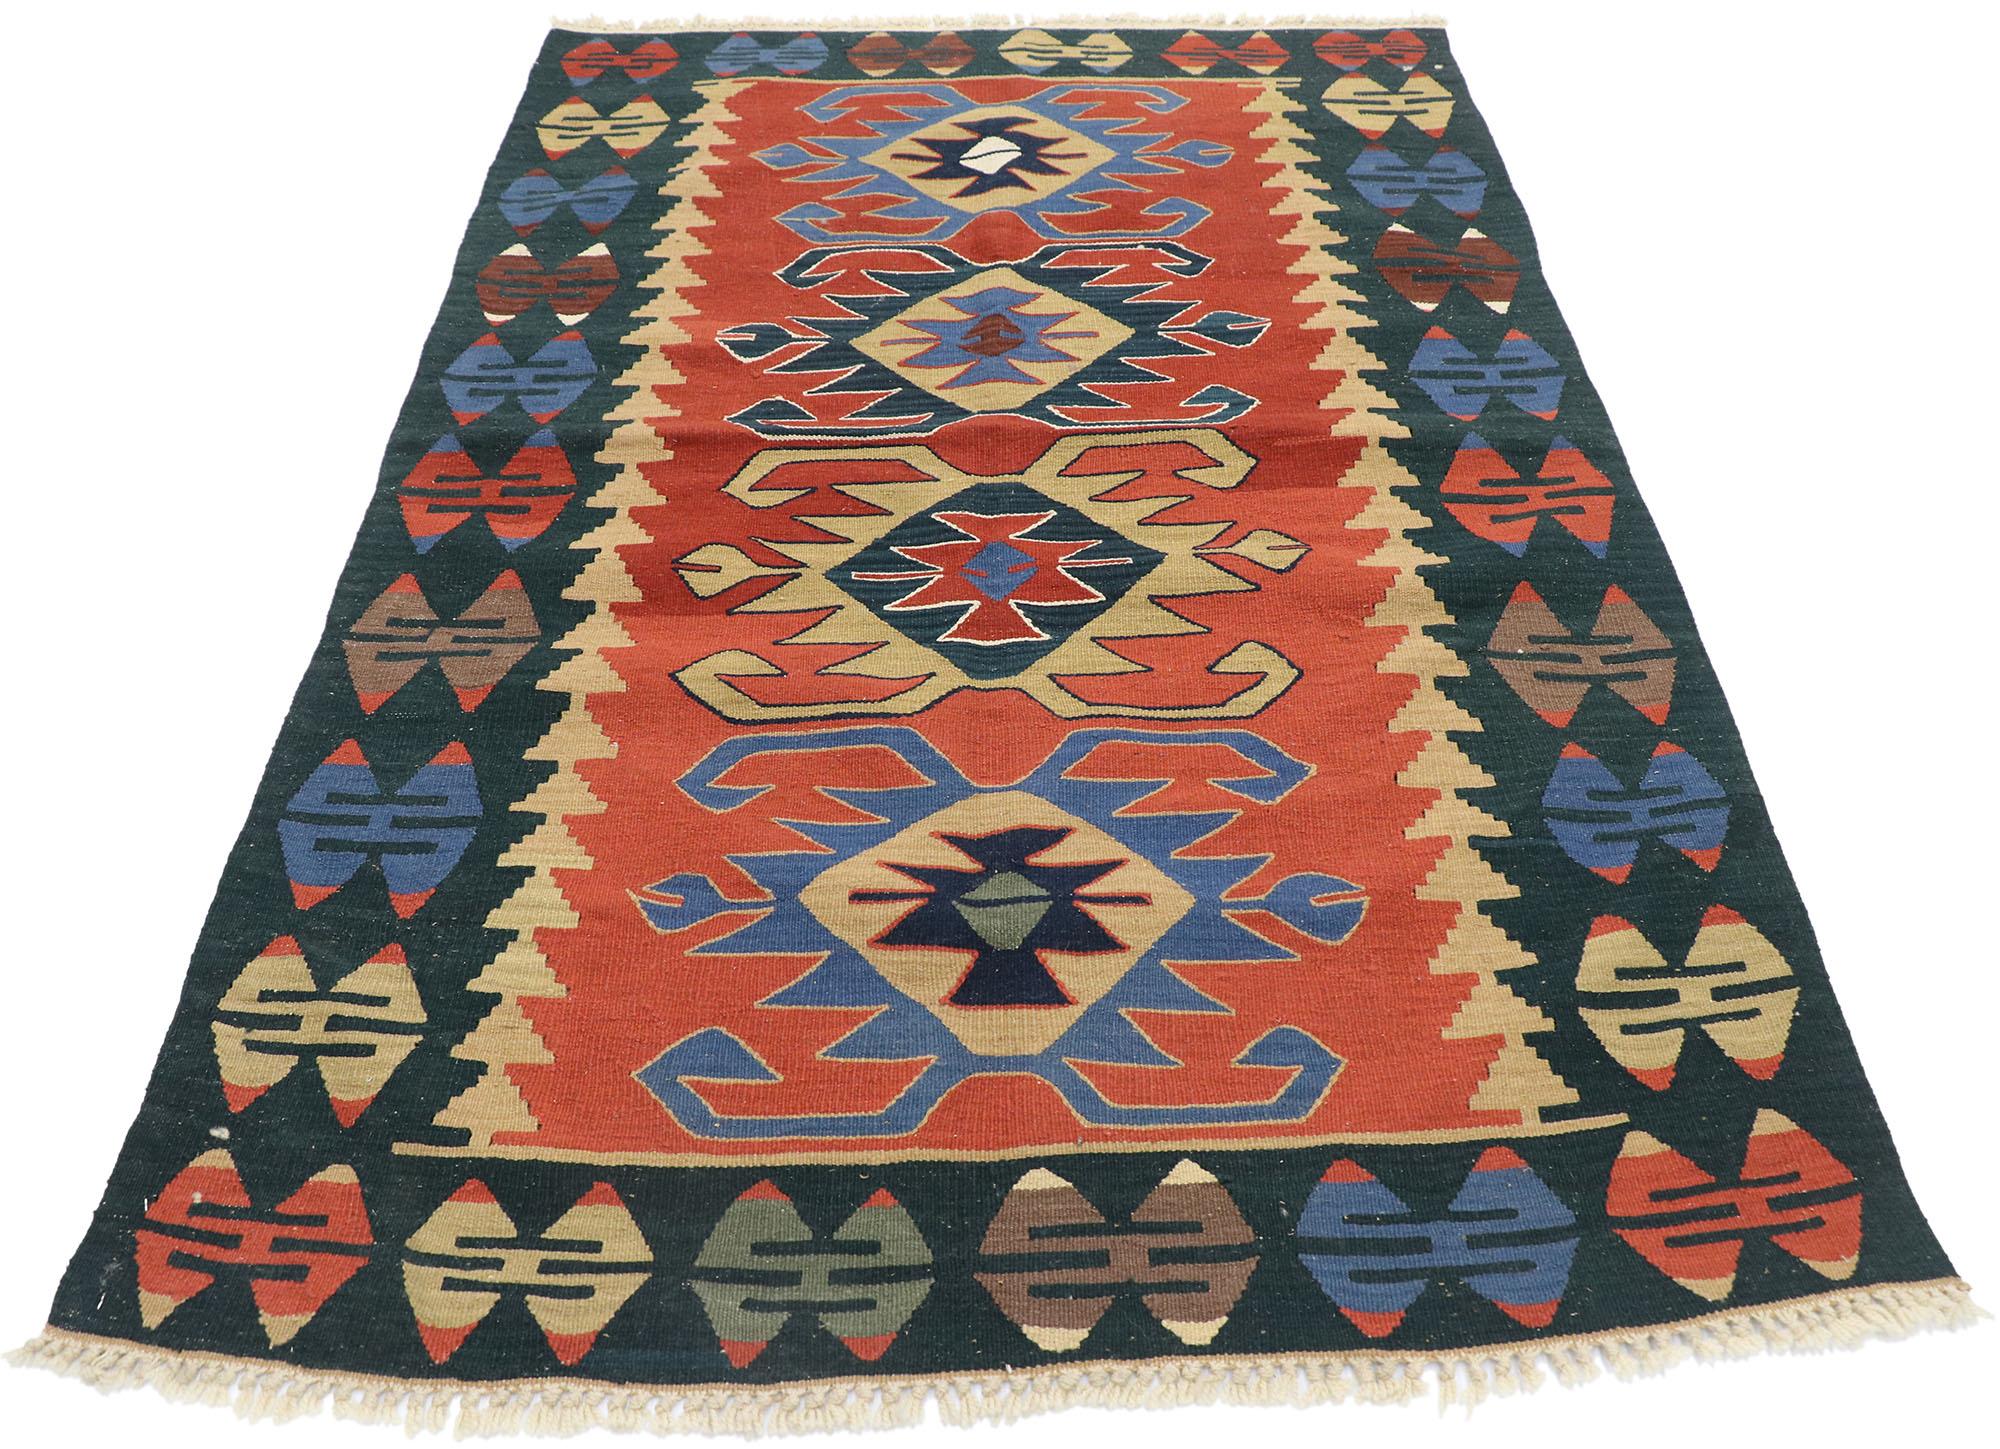 Hand-Woven Vintage Persian Shiraz Kilim Rug, Modern Southwest Style Meets Luxury Lodge